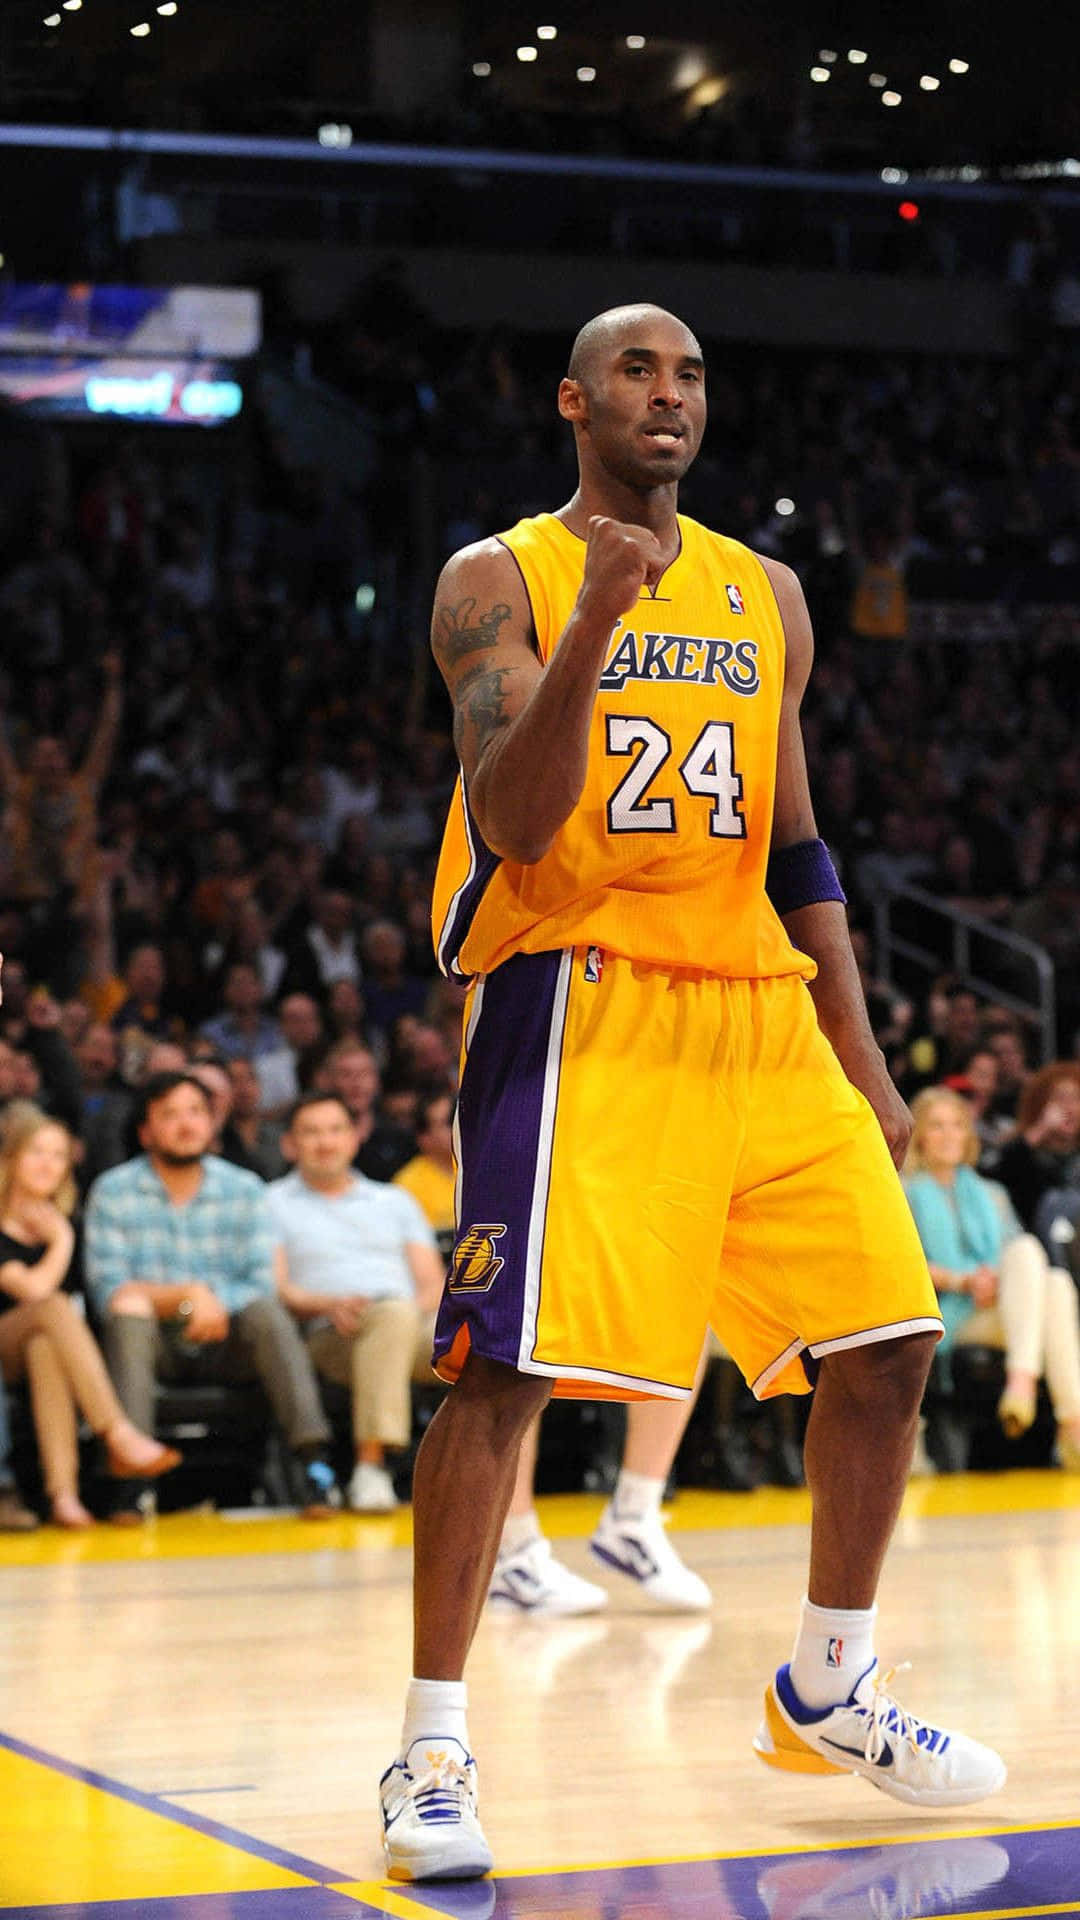 Kobe Bryant - Legendary NBA Basketball Player